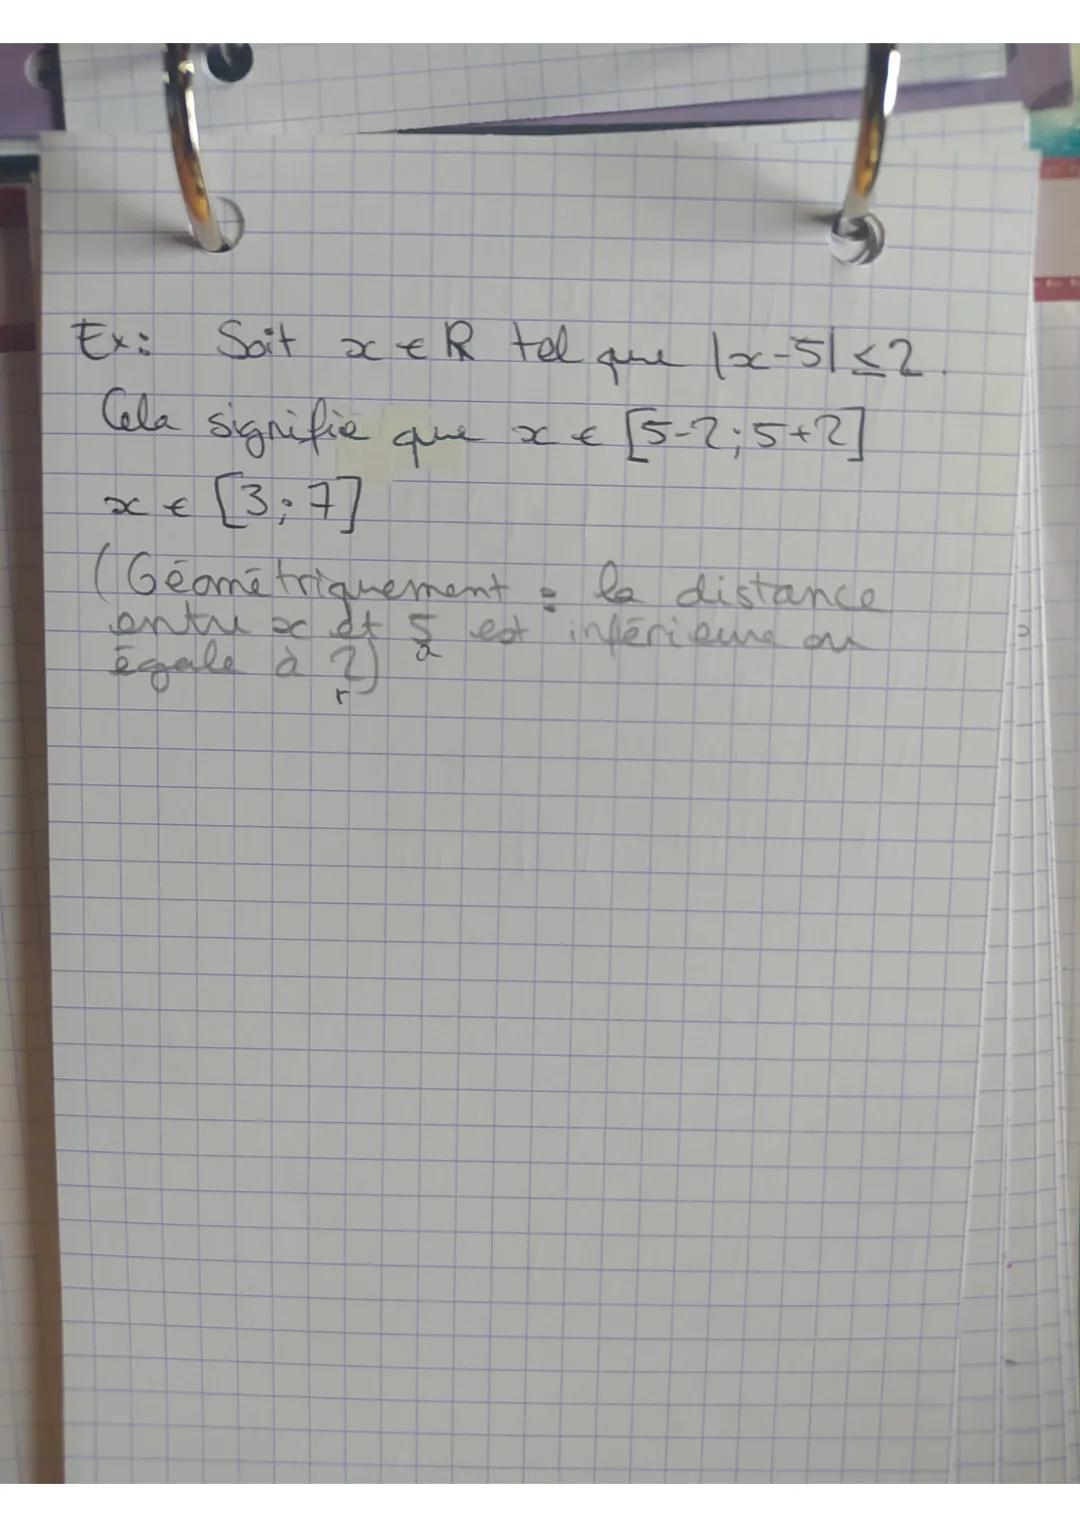 Maths Chapitre 6 Encadrement
Eet intervalles
I) Intervalles de R
F
xe 0:47
-1<x<3
xe 1-1;3]
2<x<4
x € ]2;4[
x 22
*€ [2; +∞
[
O
+
0
1
1
+
3
x